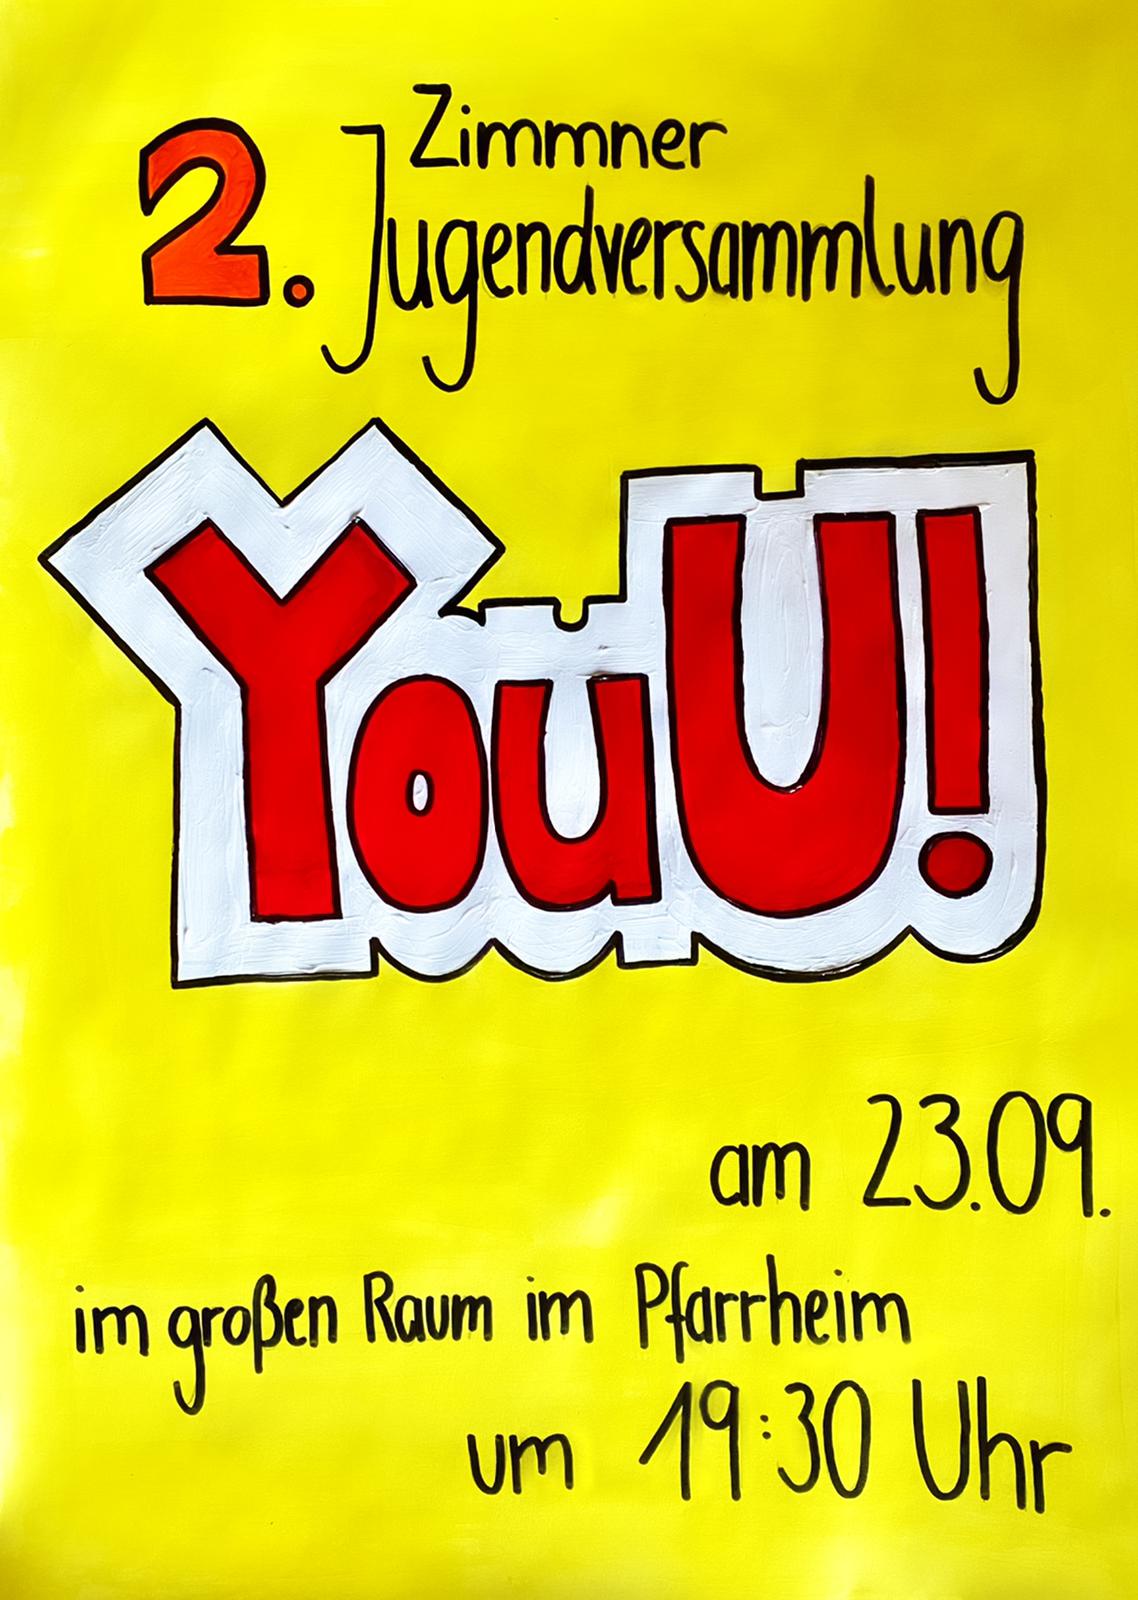 Jugendversammlung 2020 - Plakat (c) Jugendversammlung 2020 Groß-Zimmern